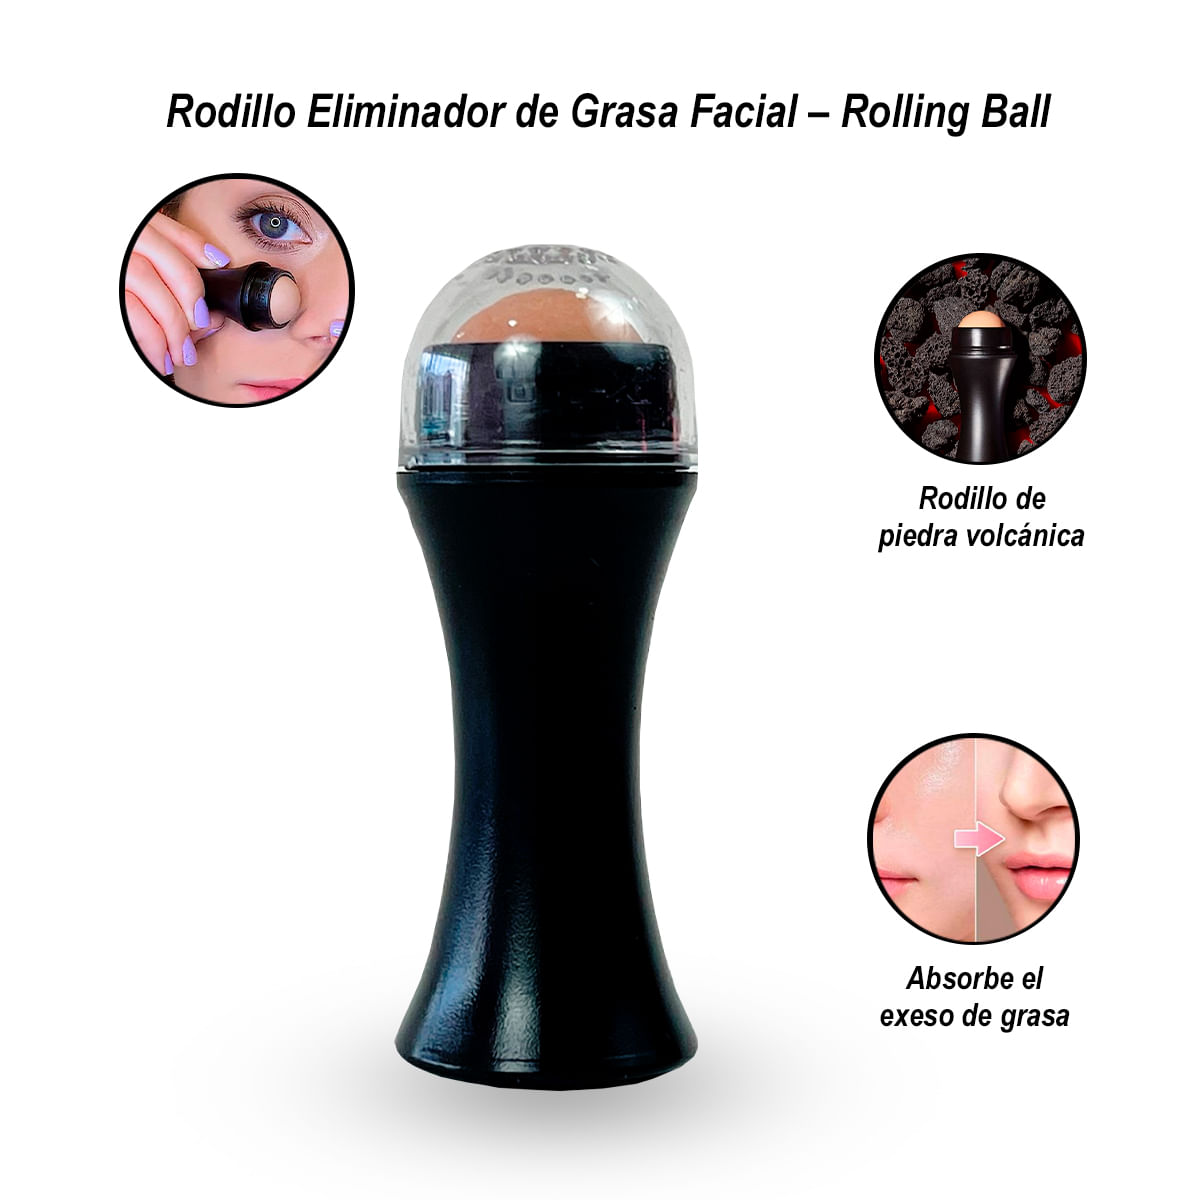 Rodillo Eliminador de Grasa Facial – Rolling Ball Multicolor